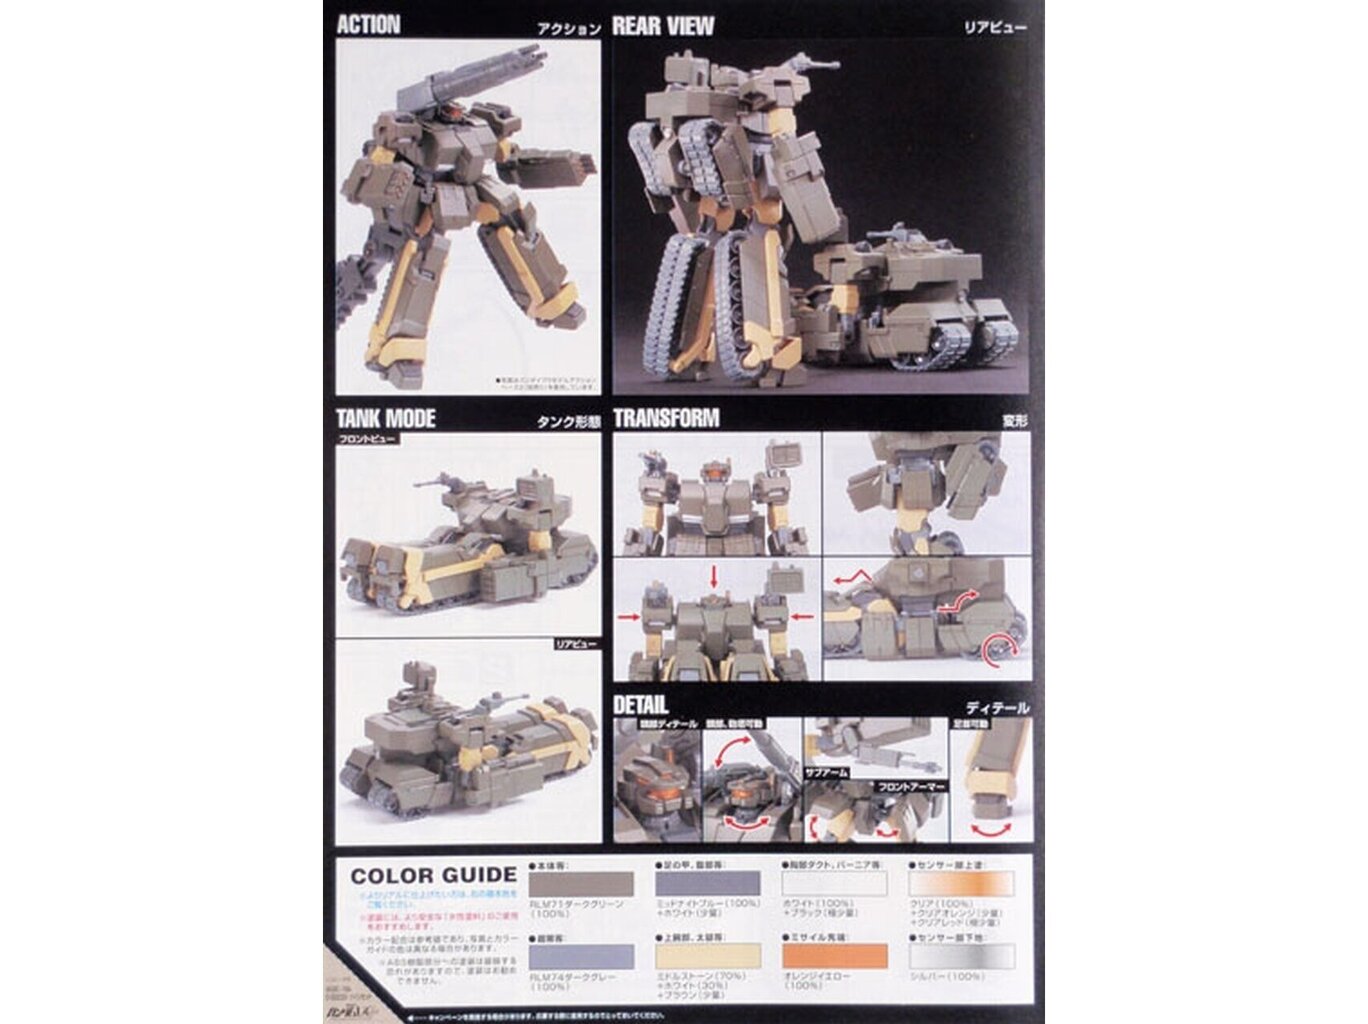 Konstruktorius Bandai - HGUC Gundam Unicorn D-50C Loto Twin Set E.F.S.F. Special Operations Mobile Suit, 1/144, 59162, 8 m.+ kaina ir informacija | Konstruktoriai ir kaladėlės | pigu.lt